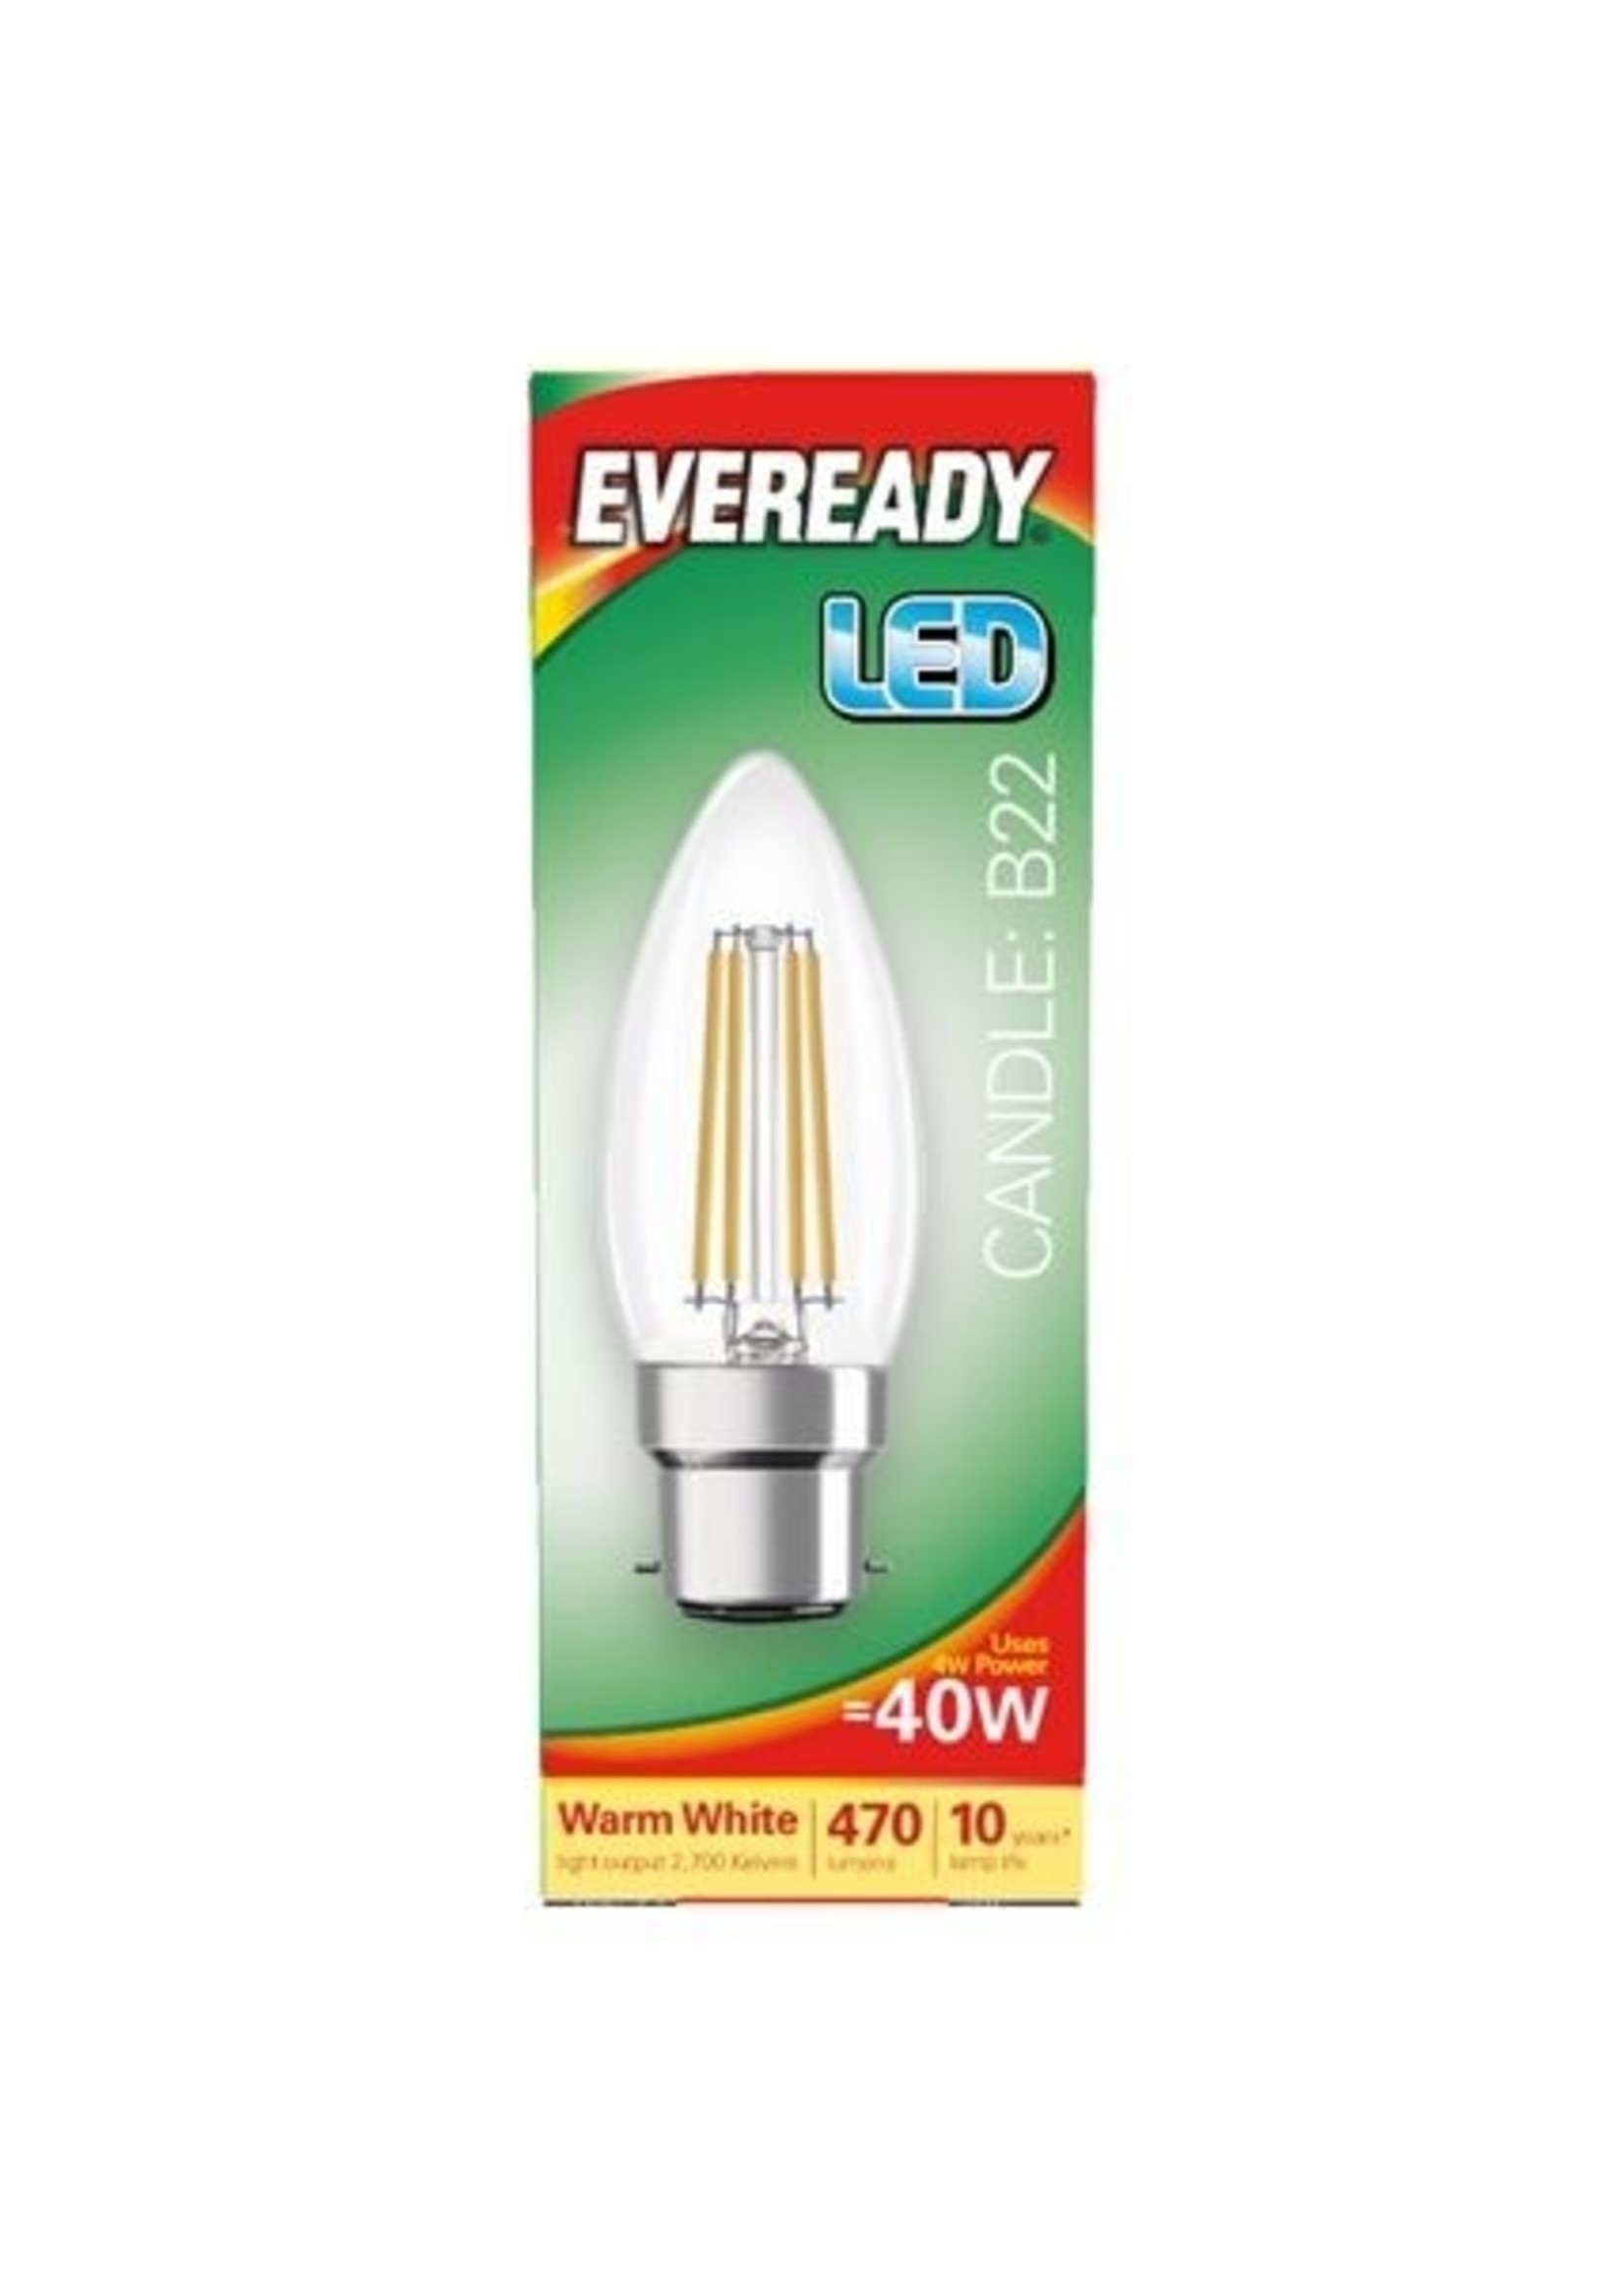 Eveready Eveready LED Filament Candle Bulb